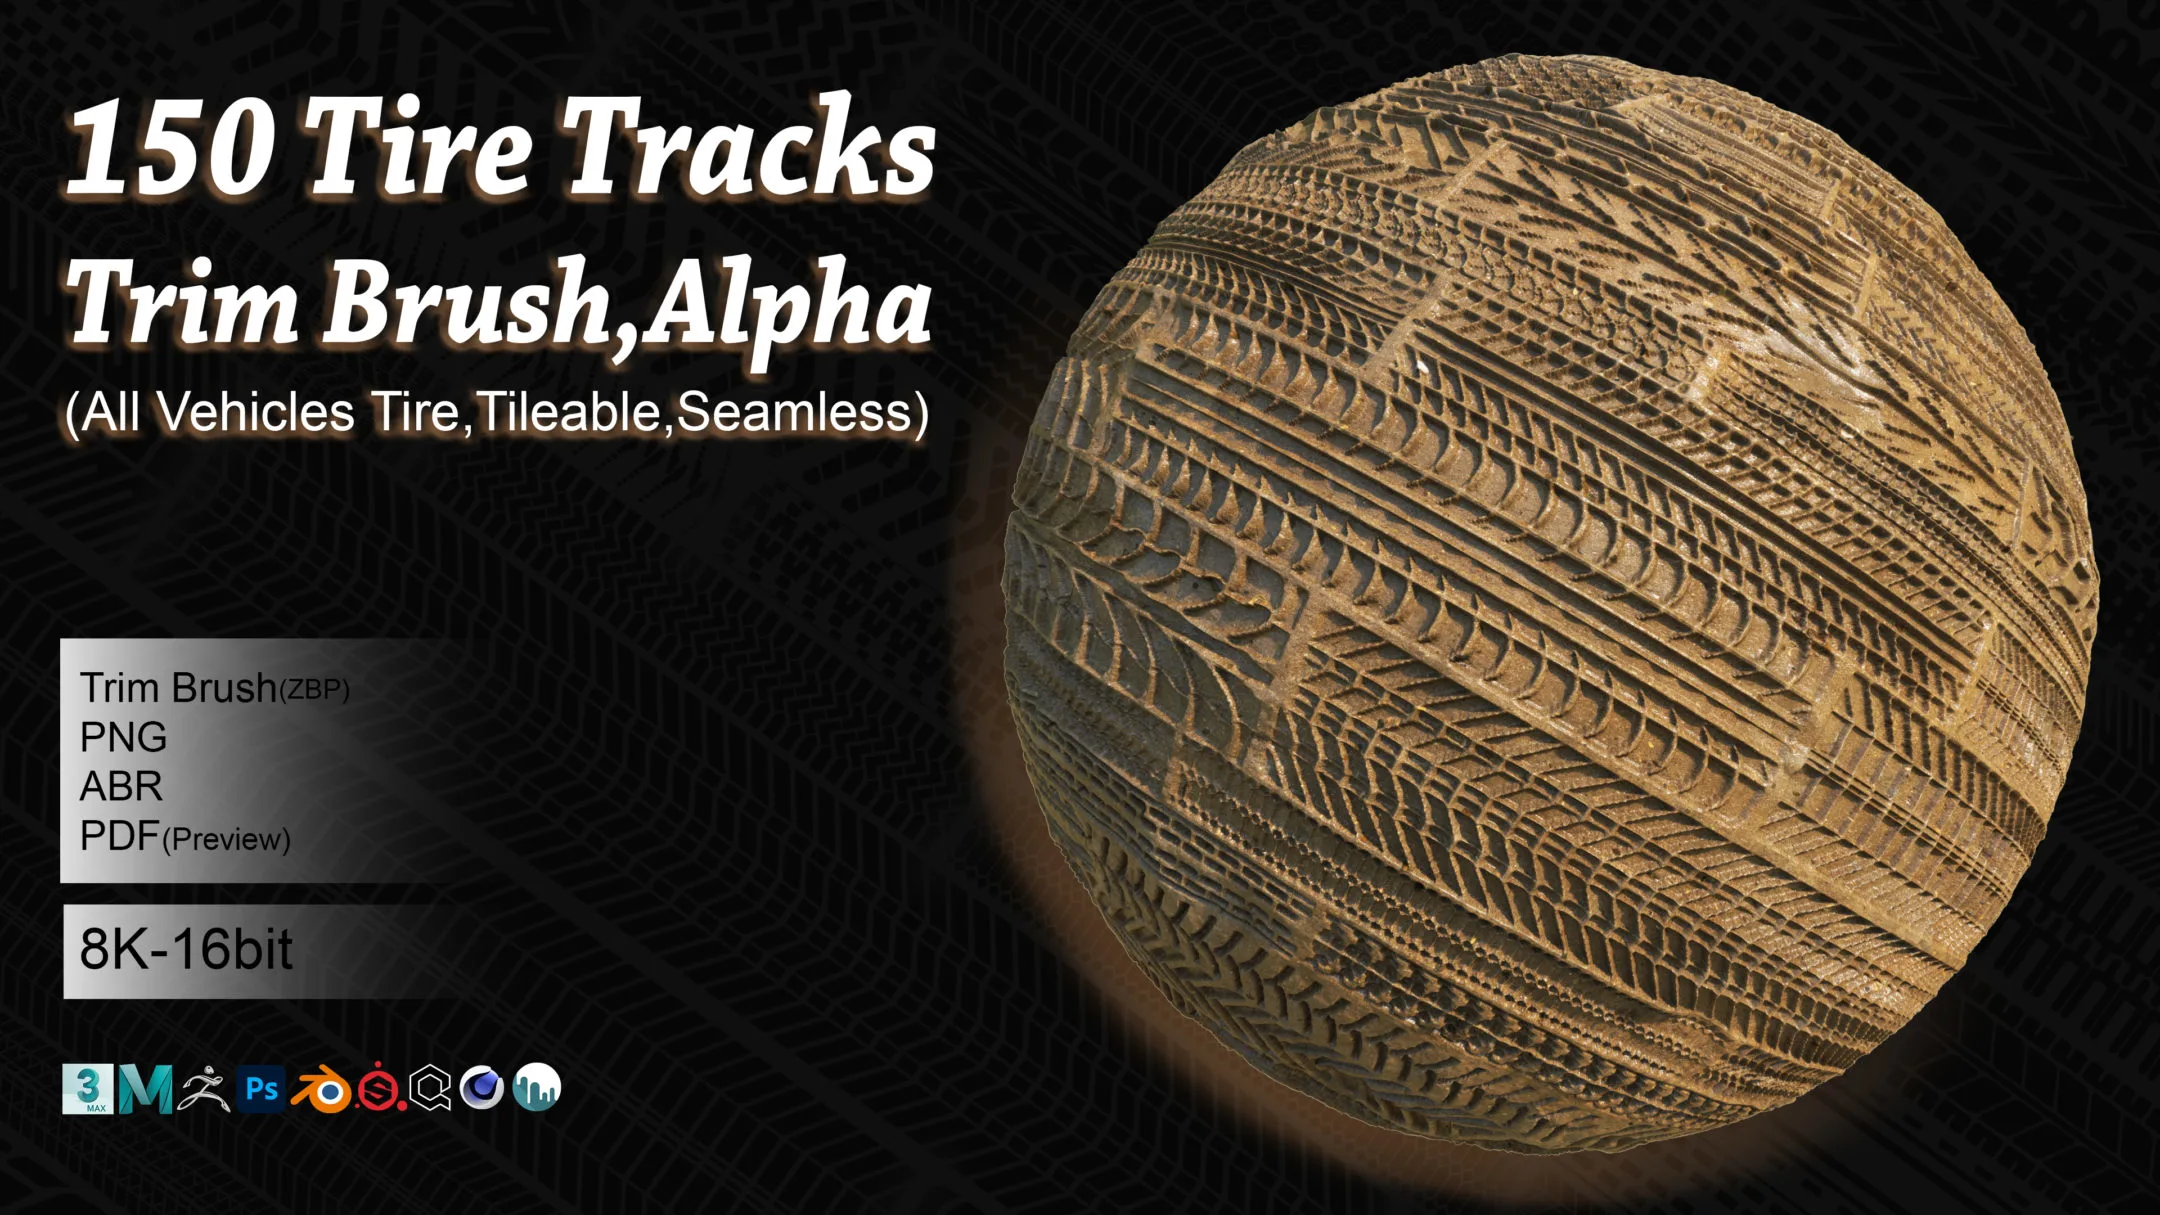 150 Tire tracks trim brush,alpha & Photoshop Brush(ABR)